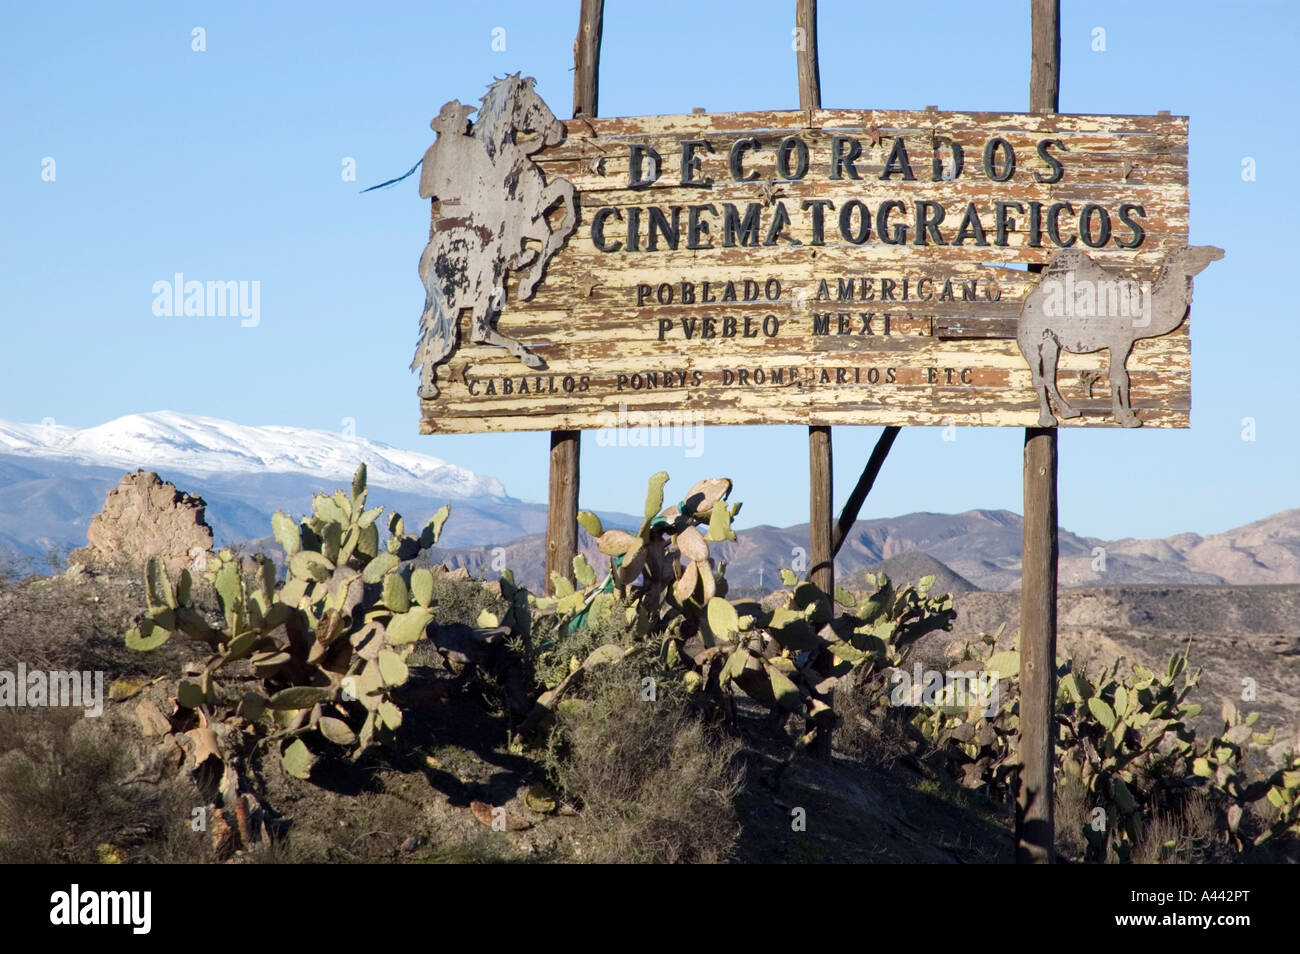 Film studio sign DECORADOS CINEMATOGRAFICOS in the southern Spanish  province of Almeria Stock Photo - Alamy